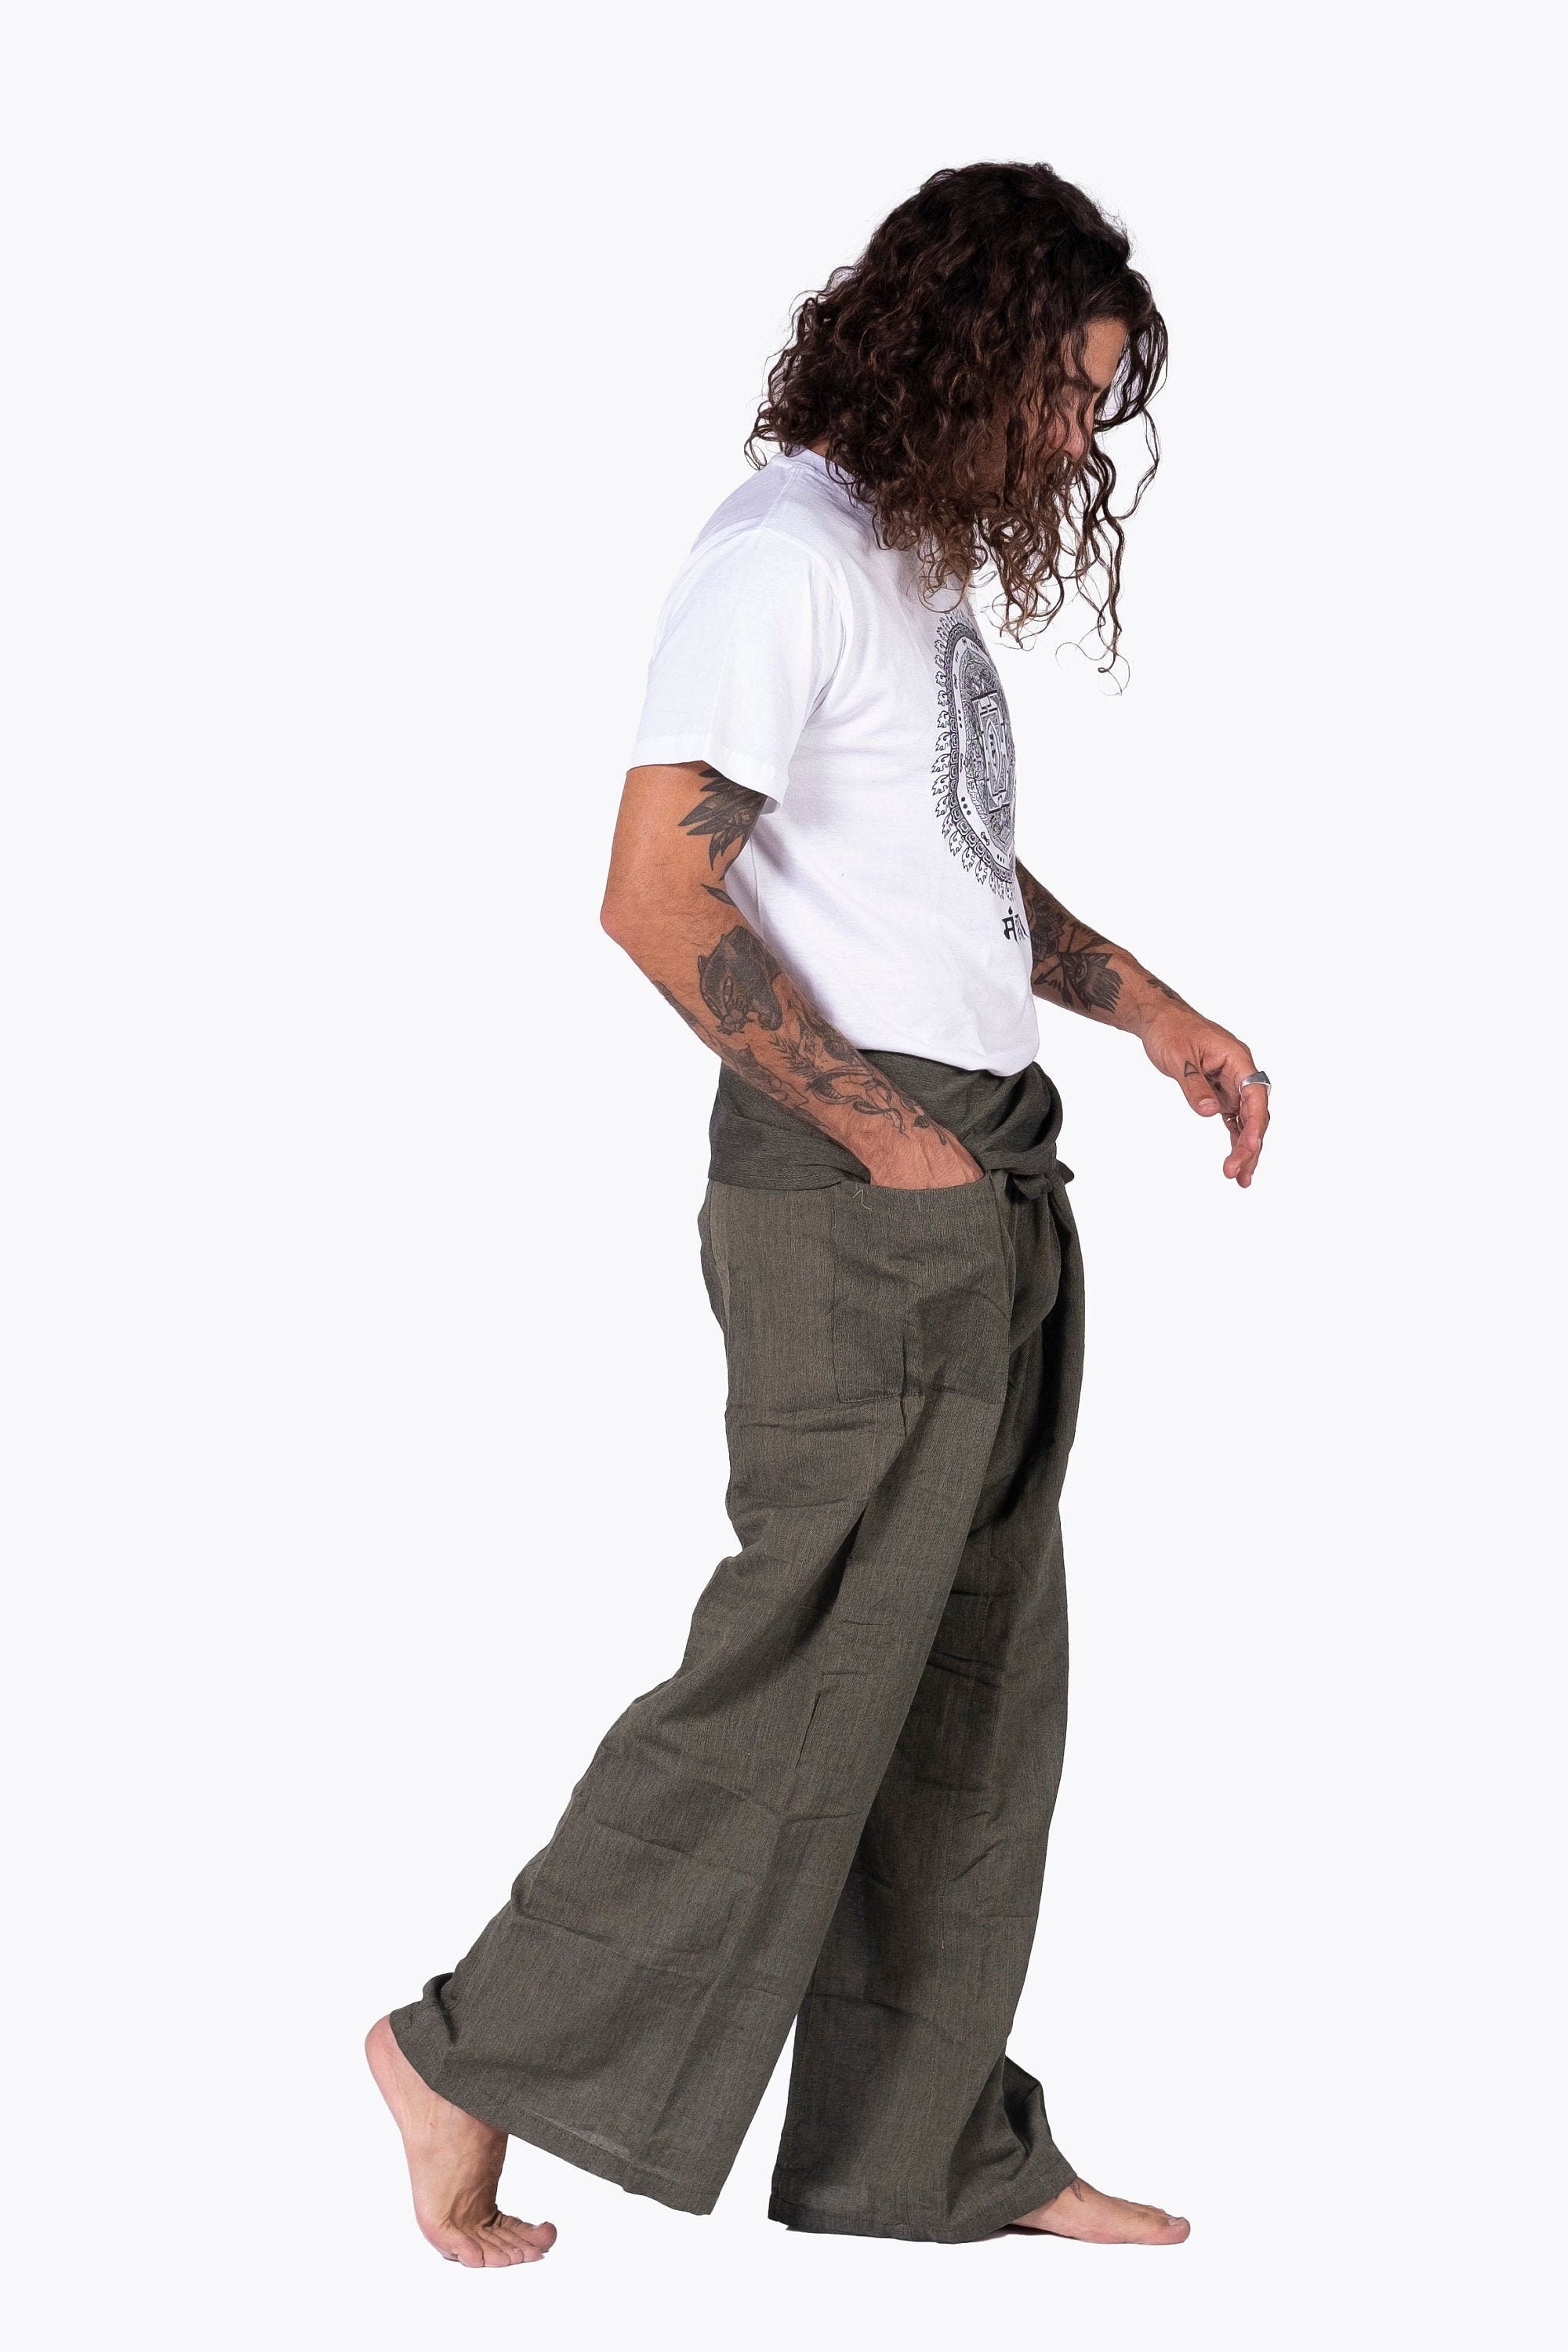 Kathmandu cargo pants  Hippie style clothing, Hippie pants, Bohemian pants